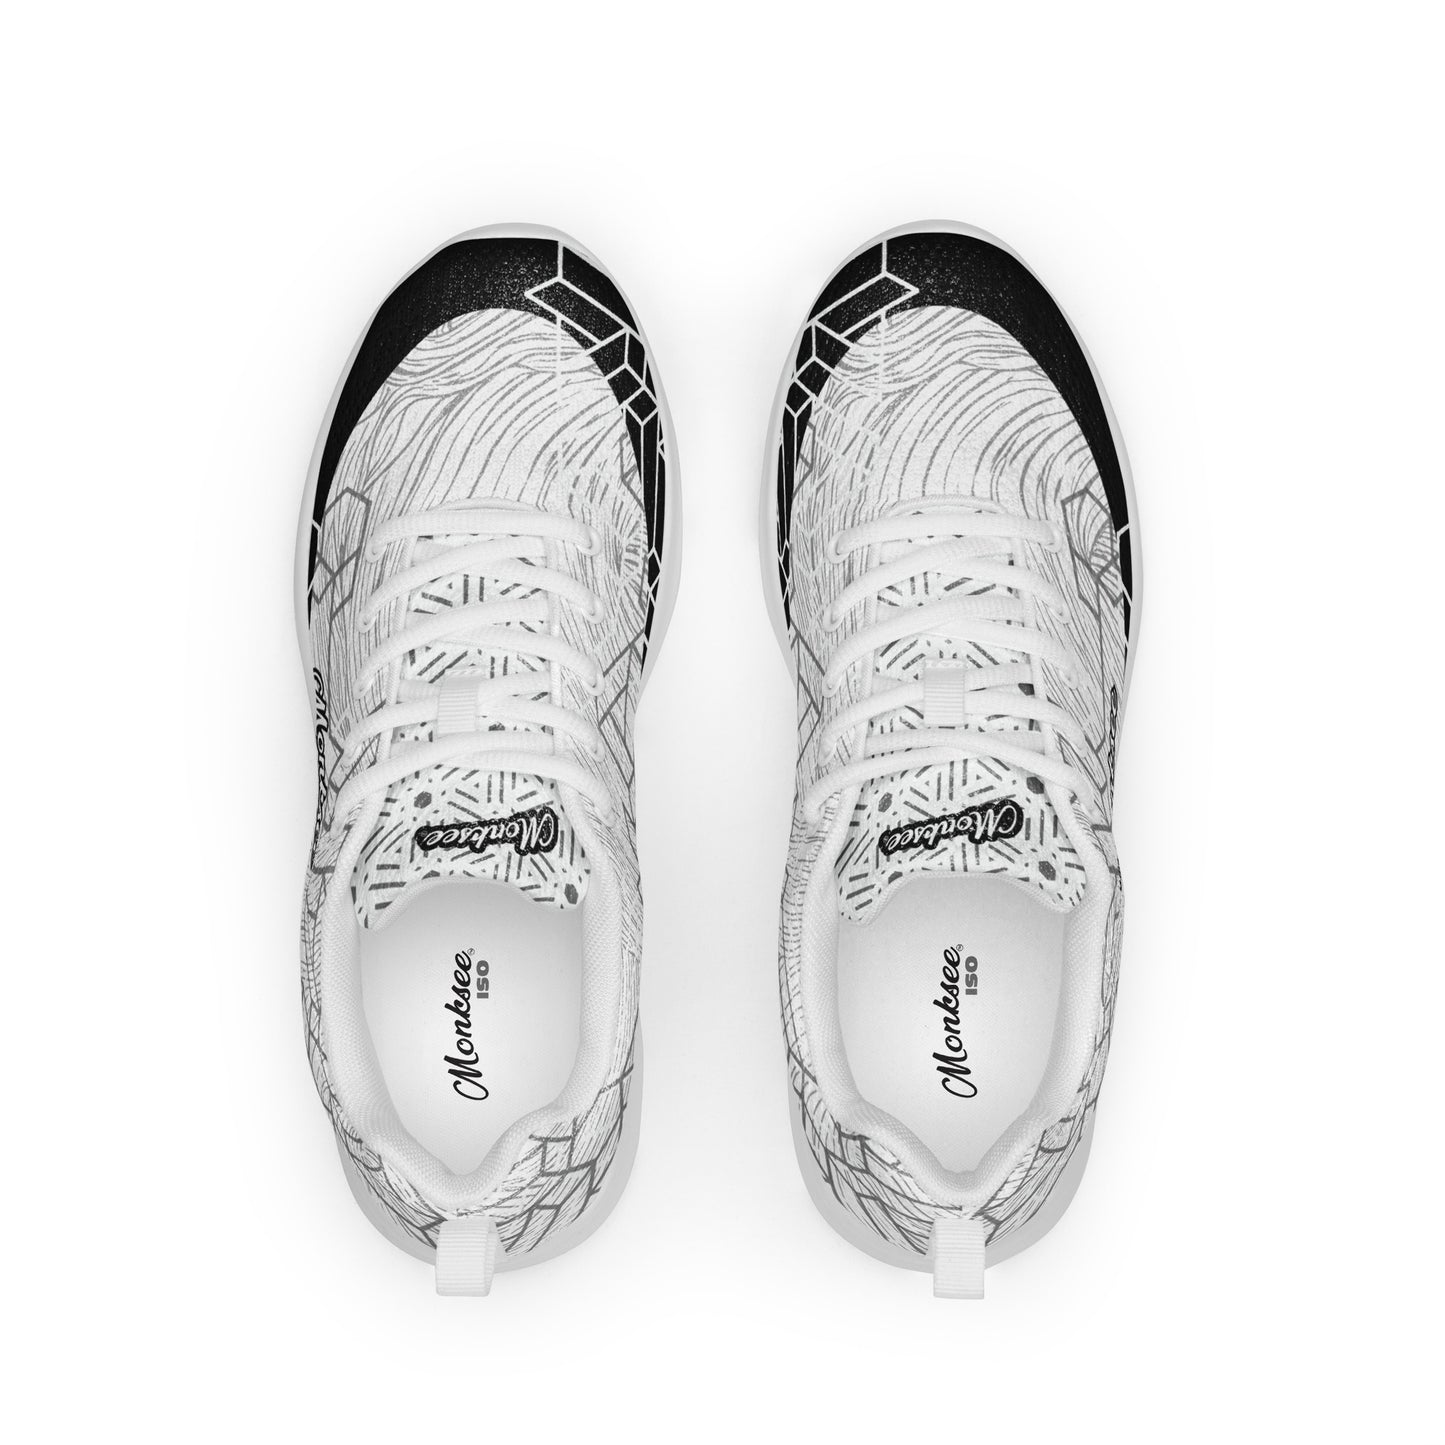 Monksee ISO Men’s Sneakers (white).